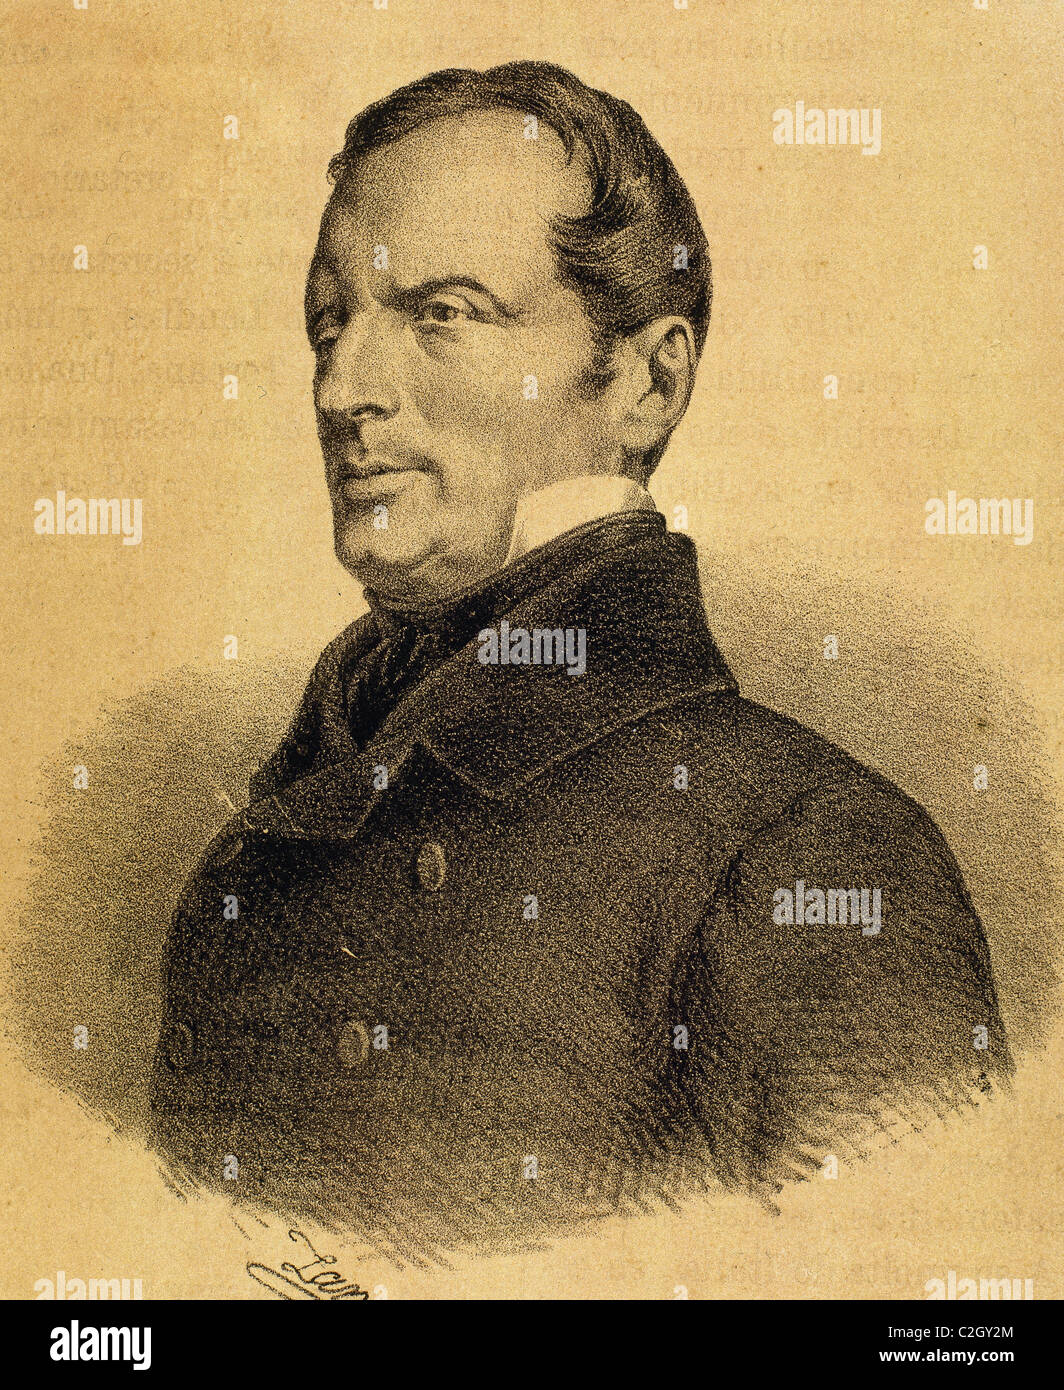 Lamartine, Alphonse de (1790-1869). French romantic writer and politician. Engraving. Stock Photo